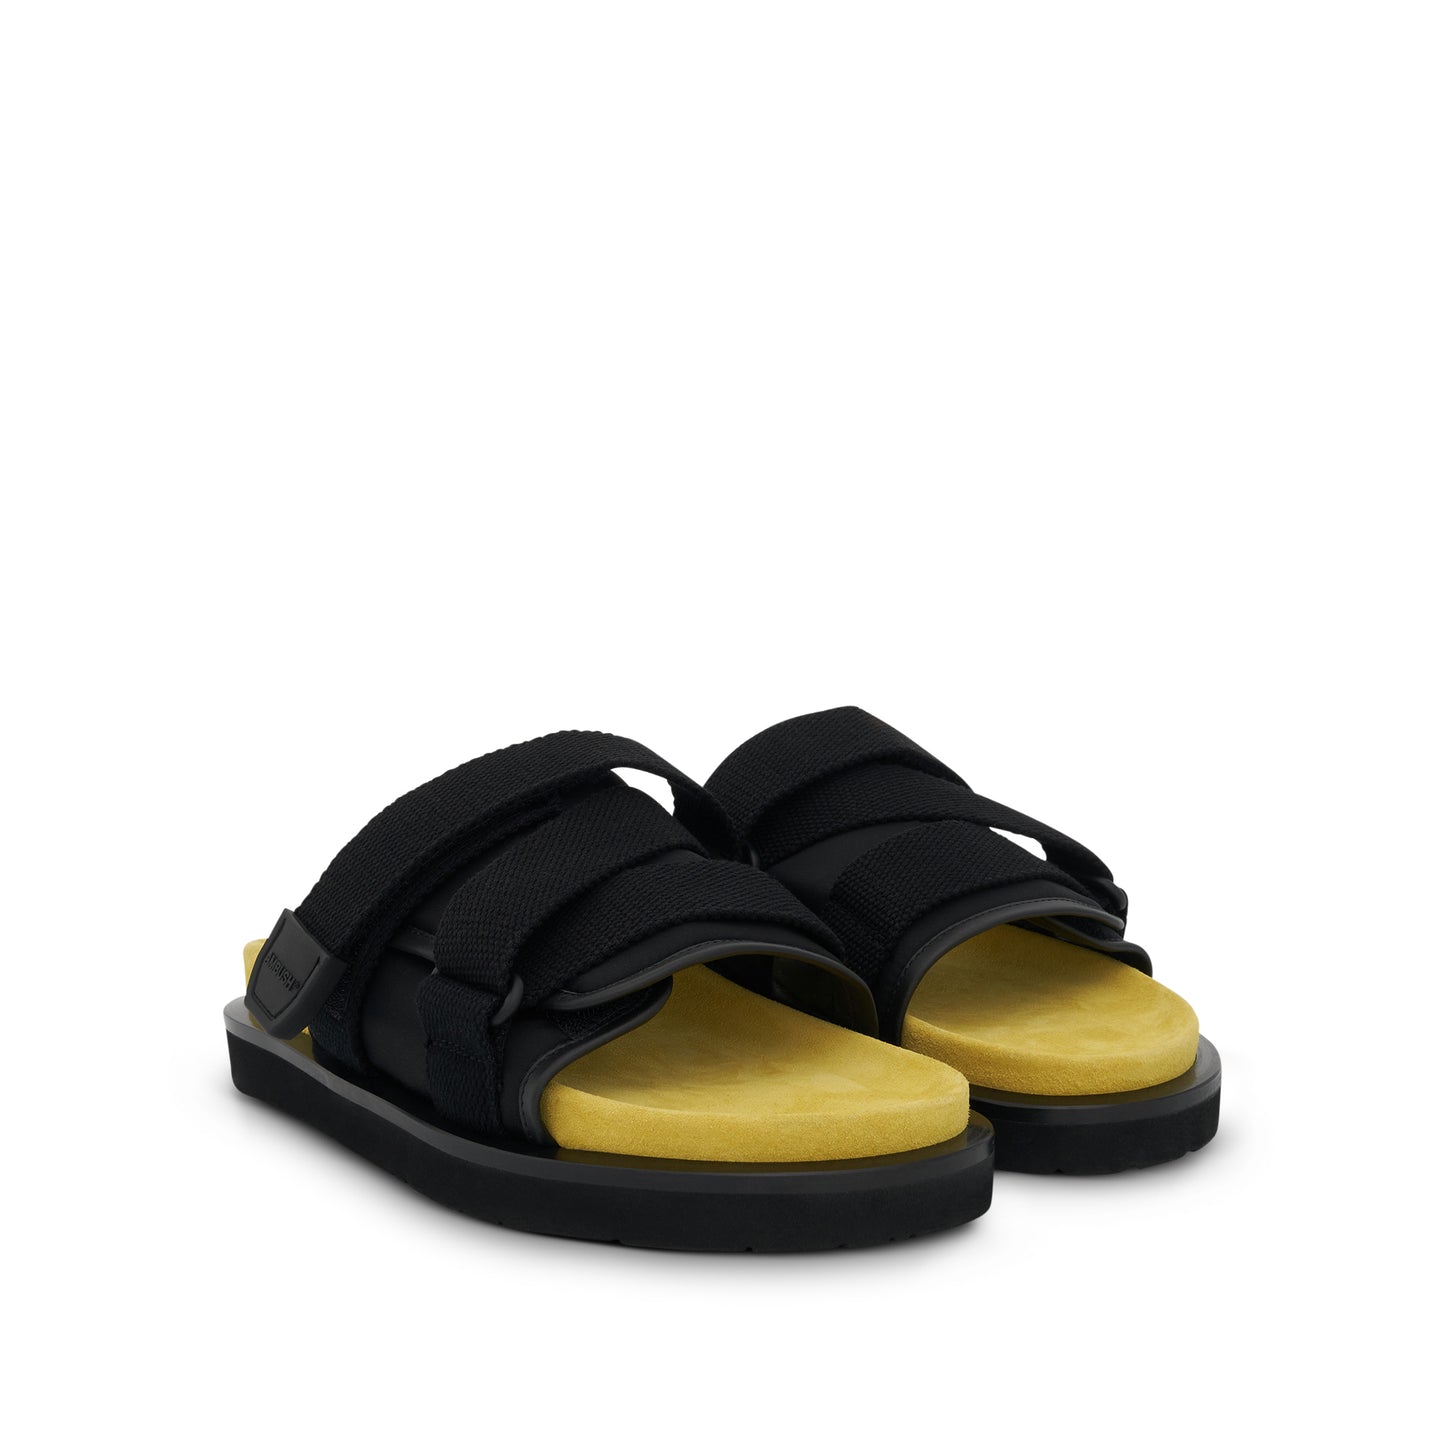 Paddle Sandal in Black/Yellow